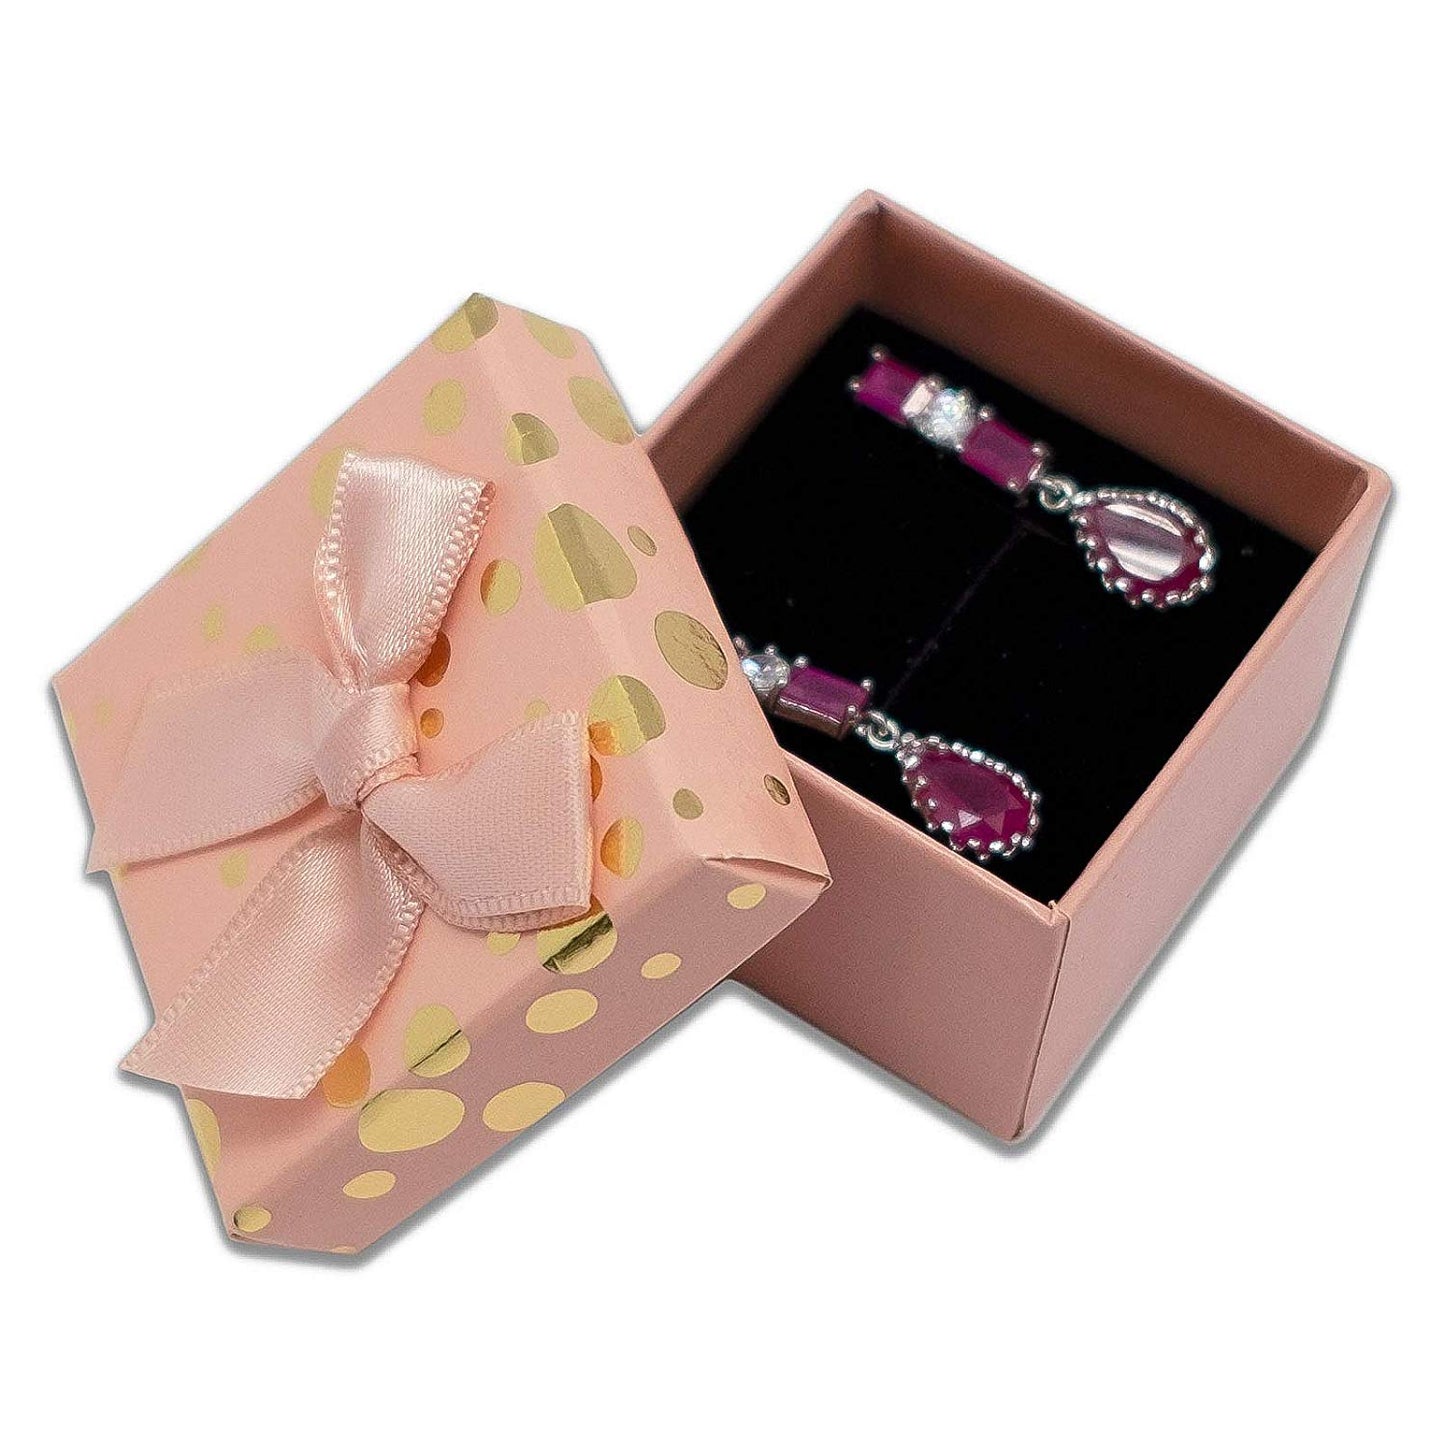 1 3/4" x 1 3/4" Pink and Gold Polka Dot Cardboard Ribbon Bow Jewelry Box